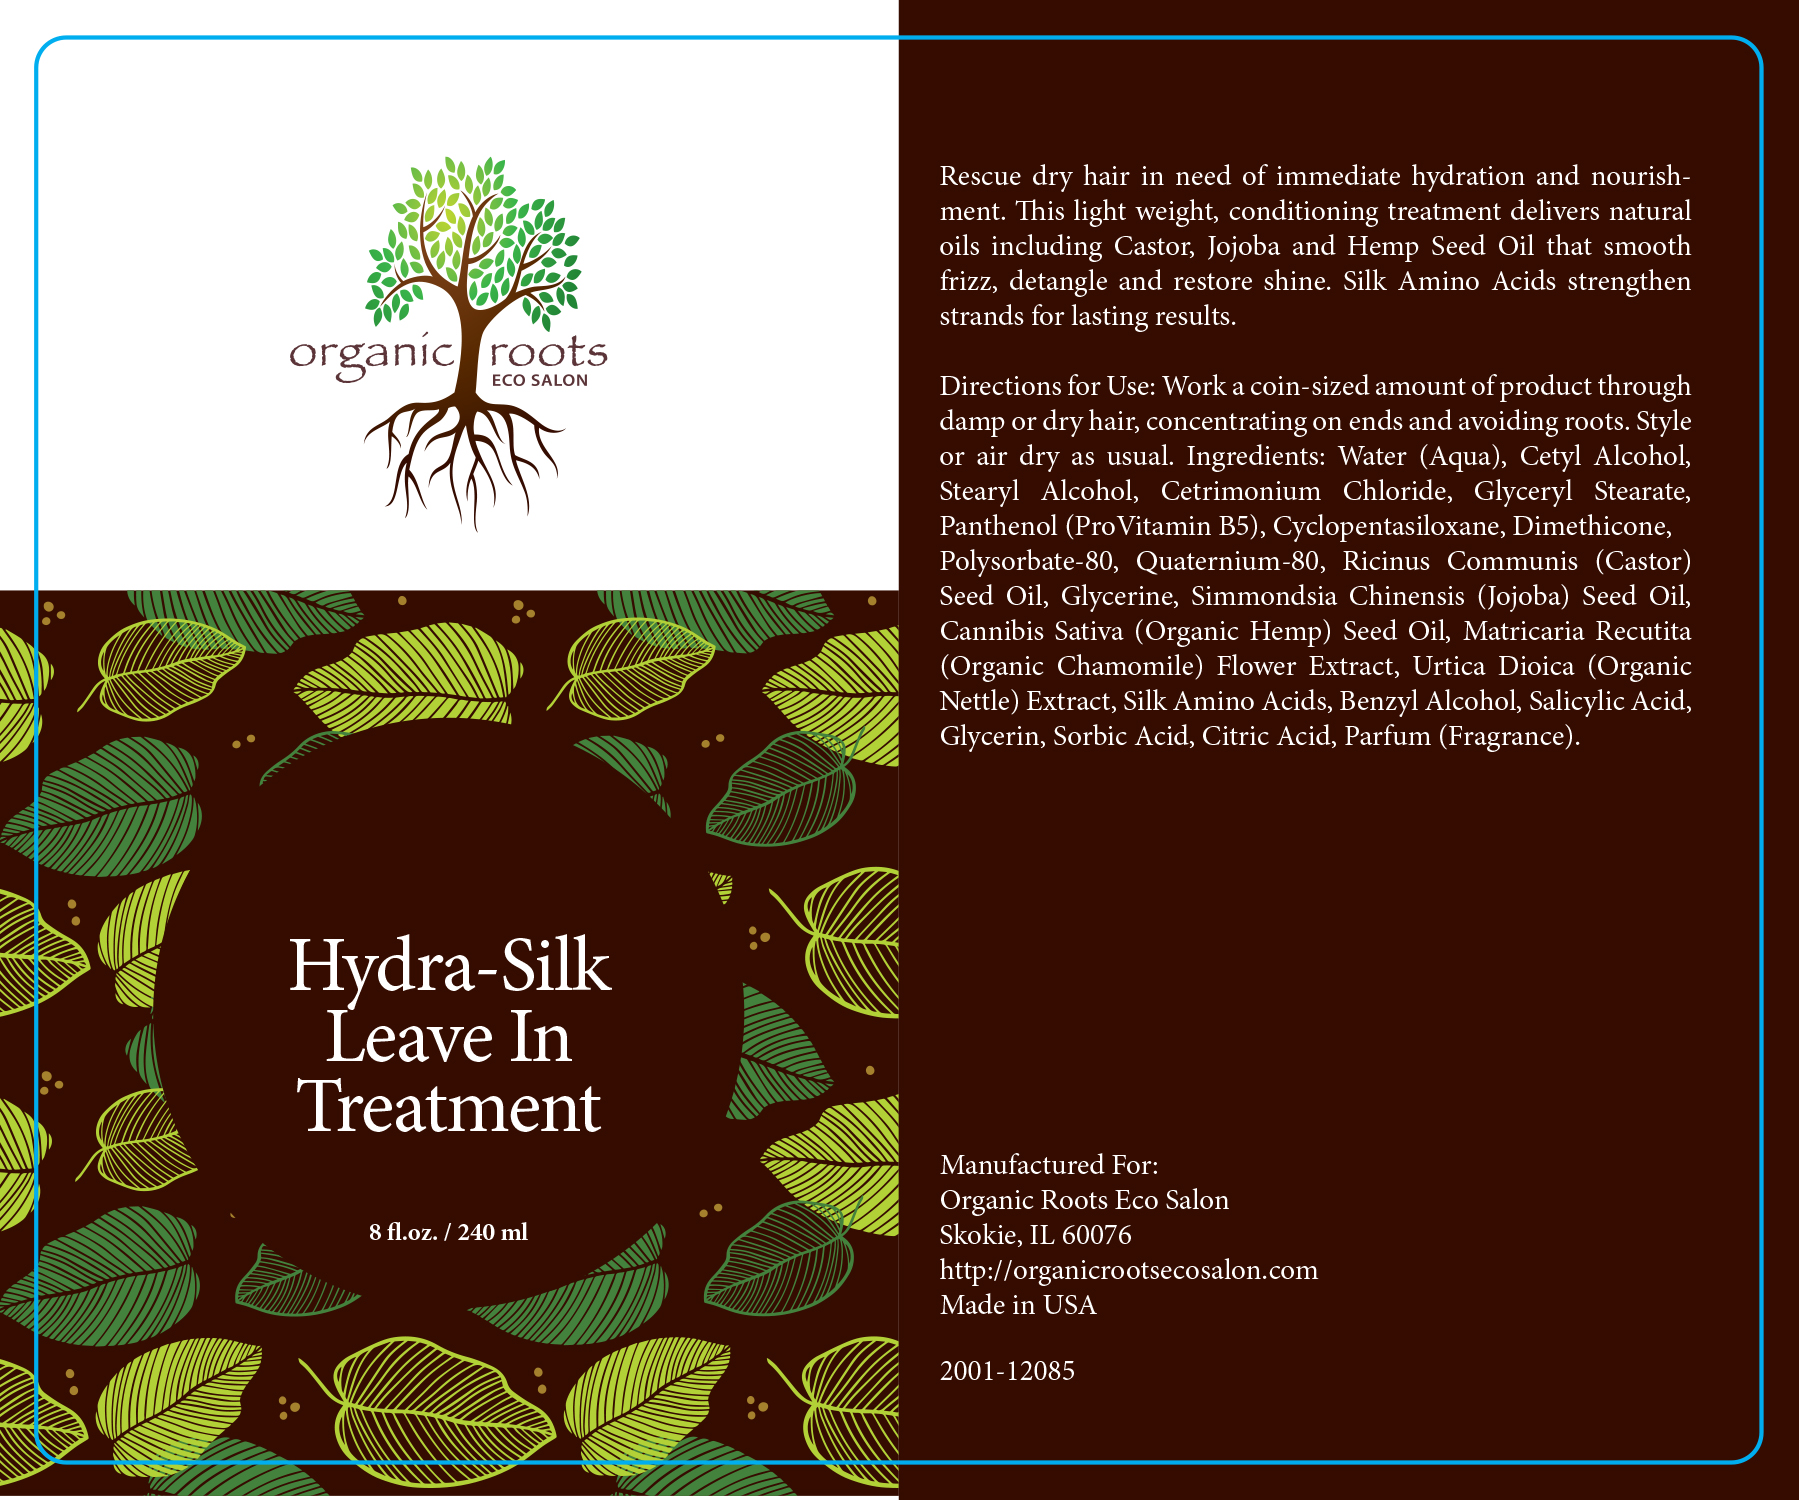 Hydra-Silk Leave In Treatment